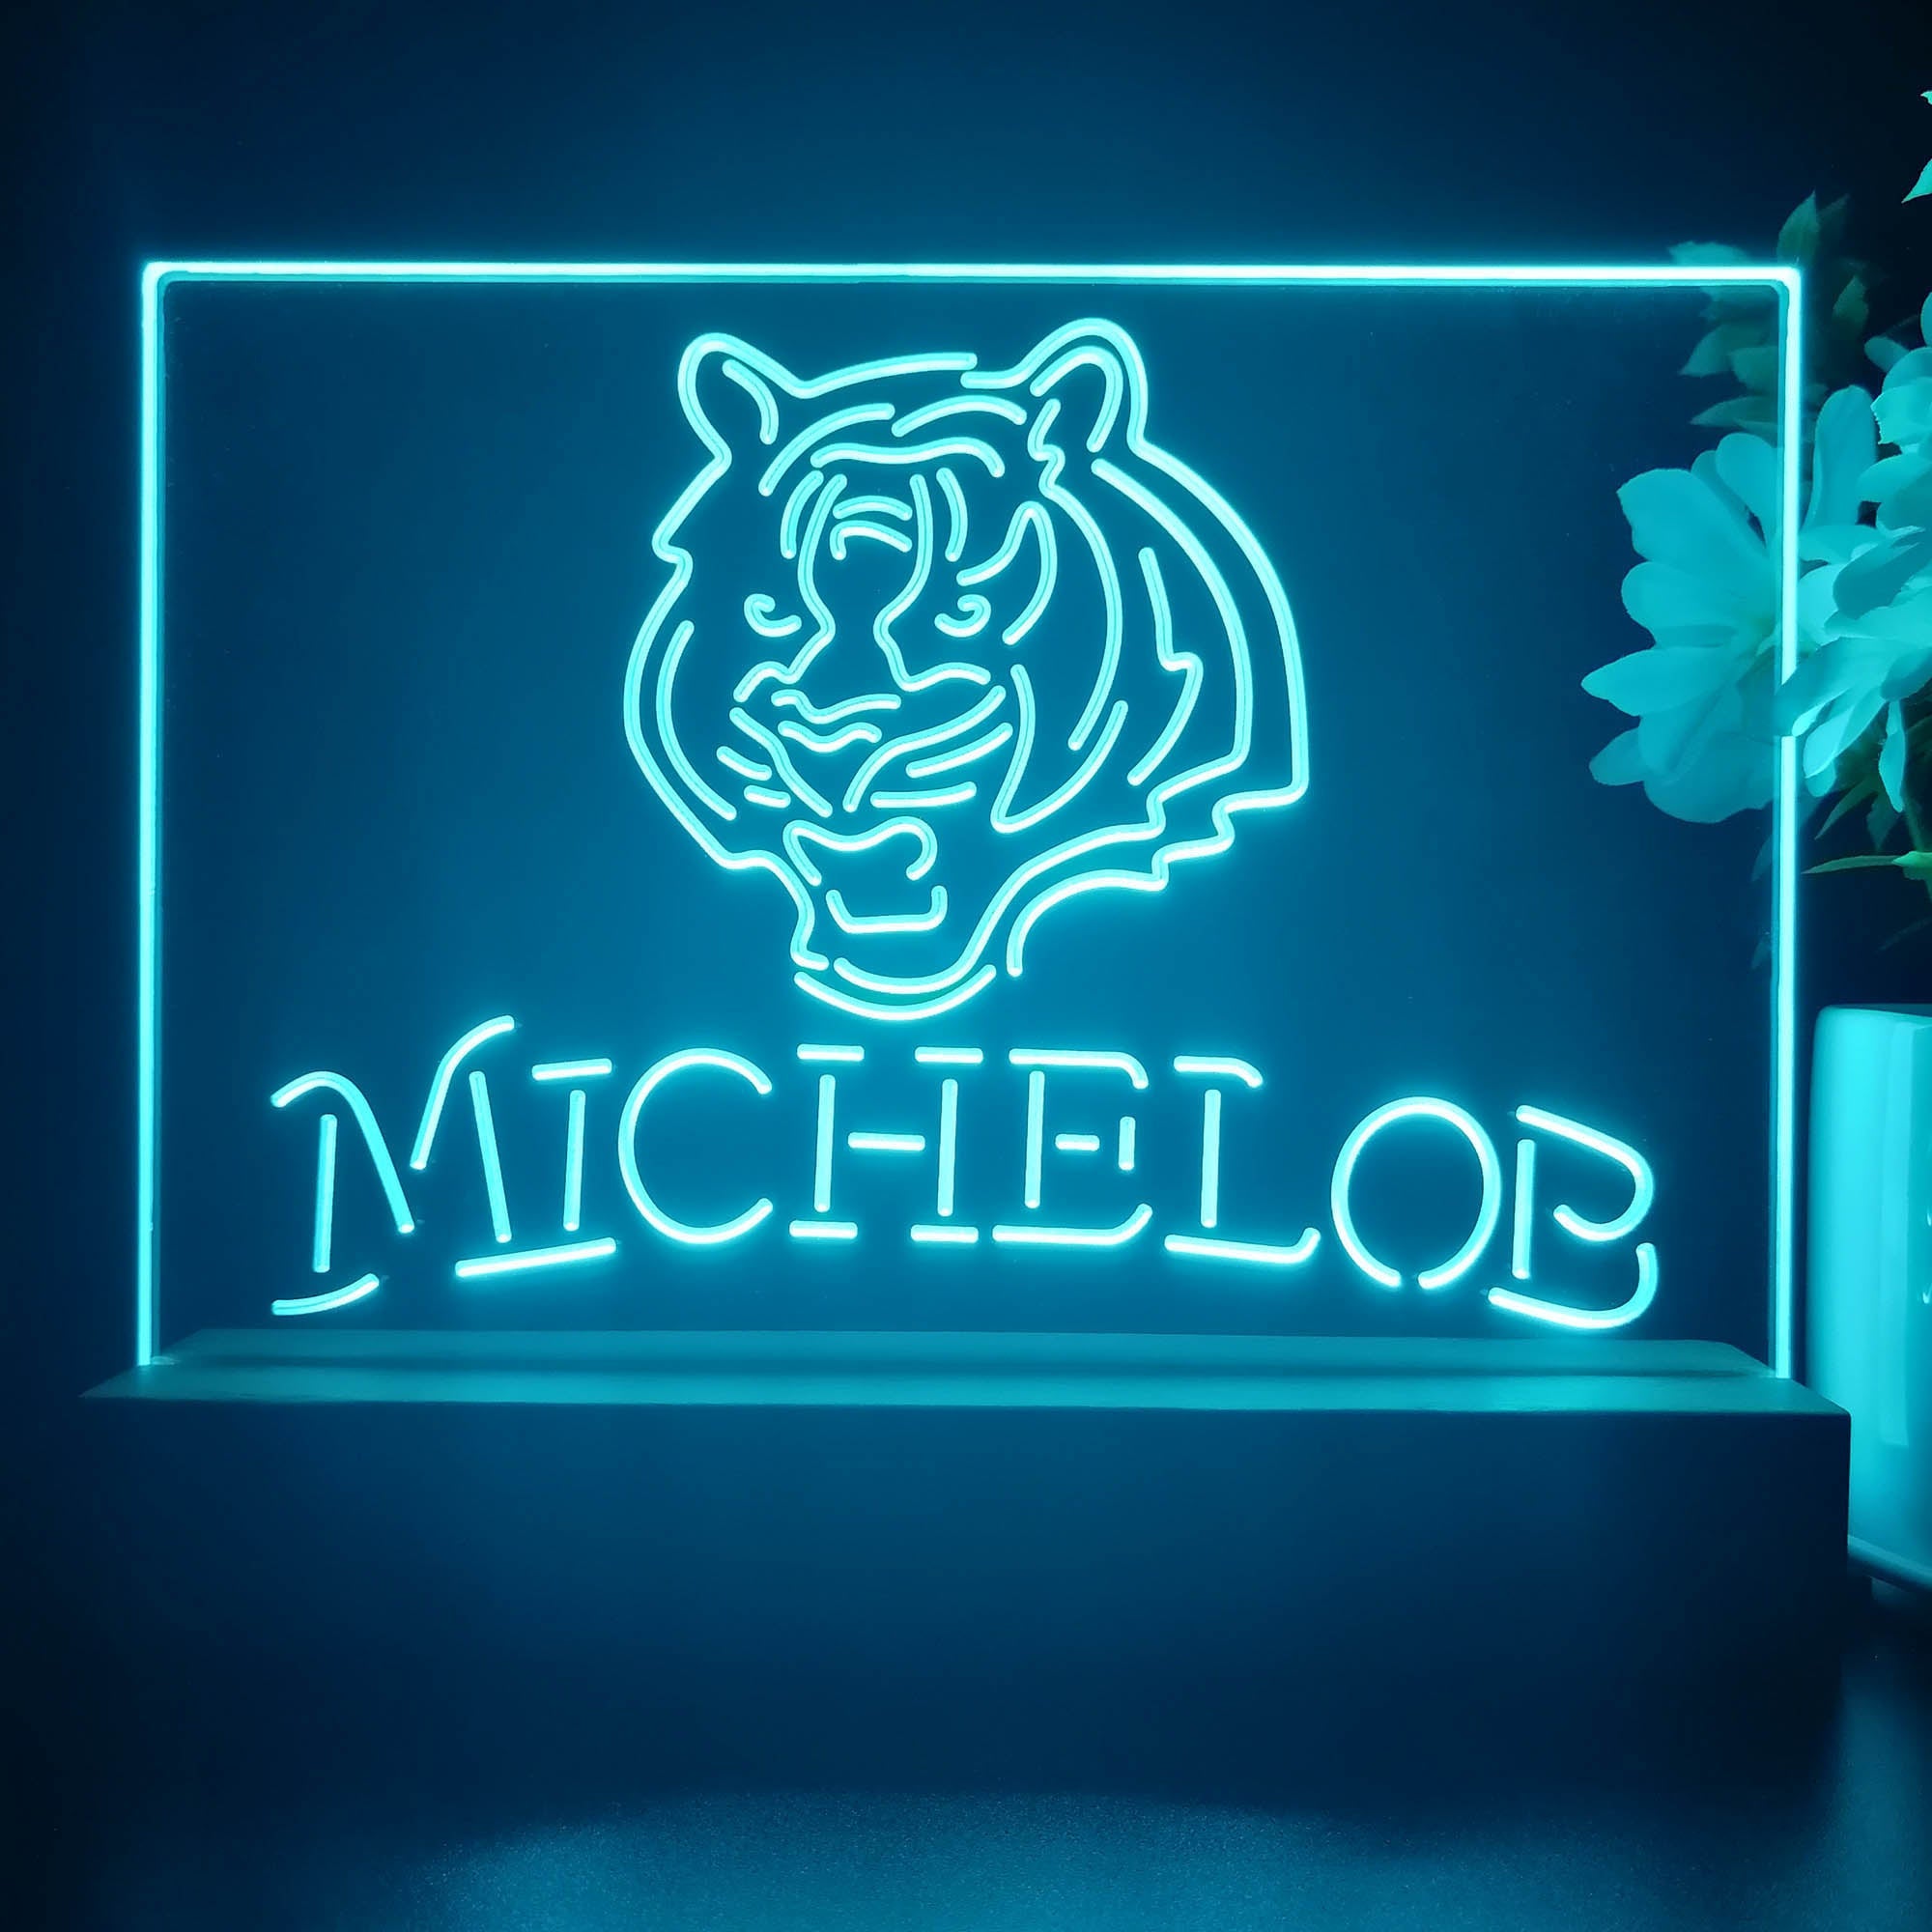 Michelob Bar Cincinnati Bengals 3D Illusion Night Light Desk Lamp